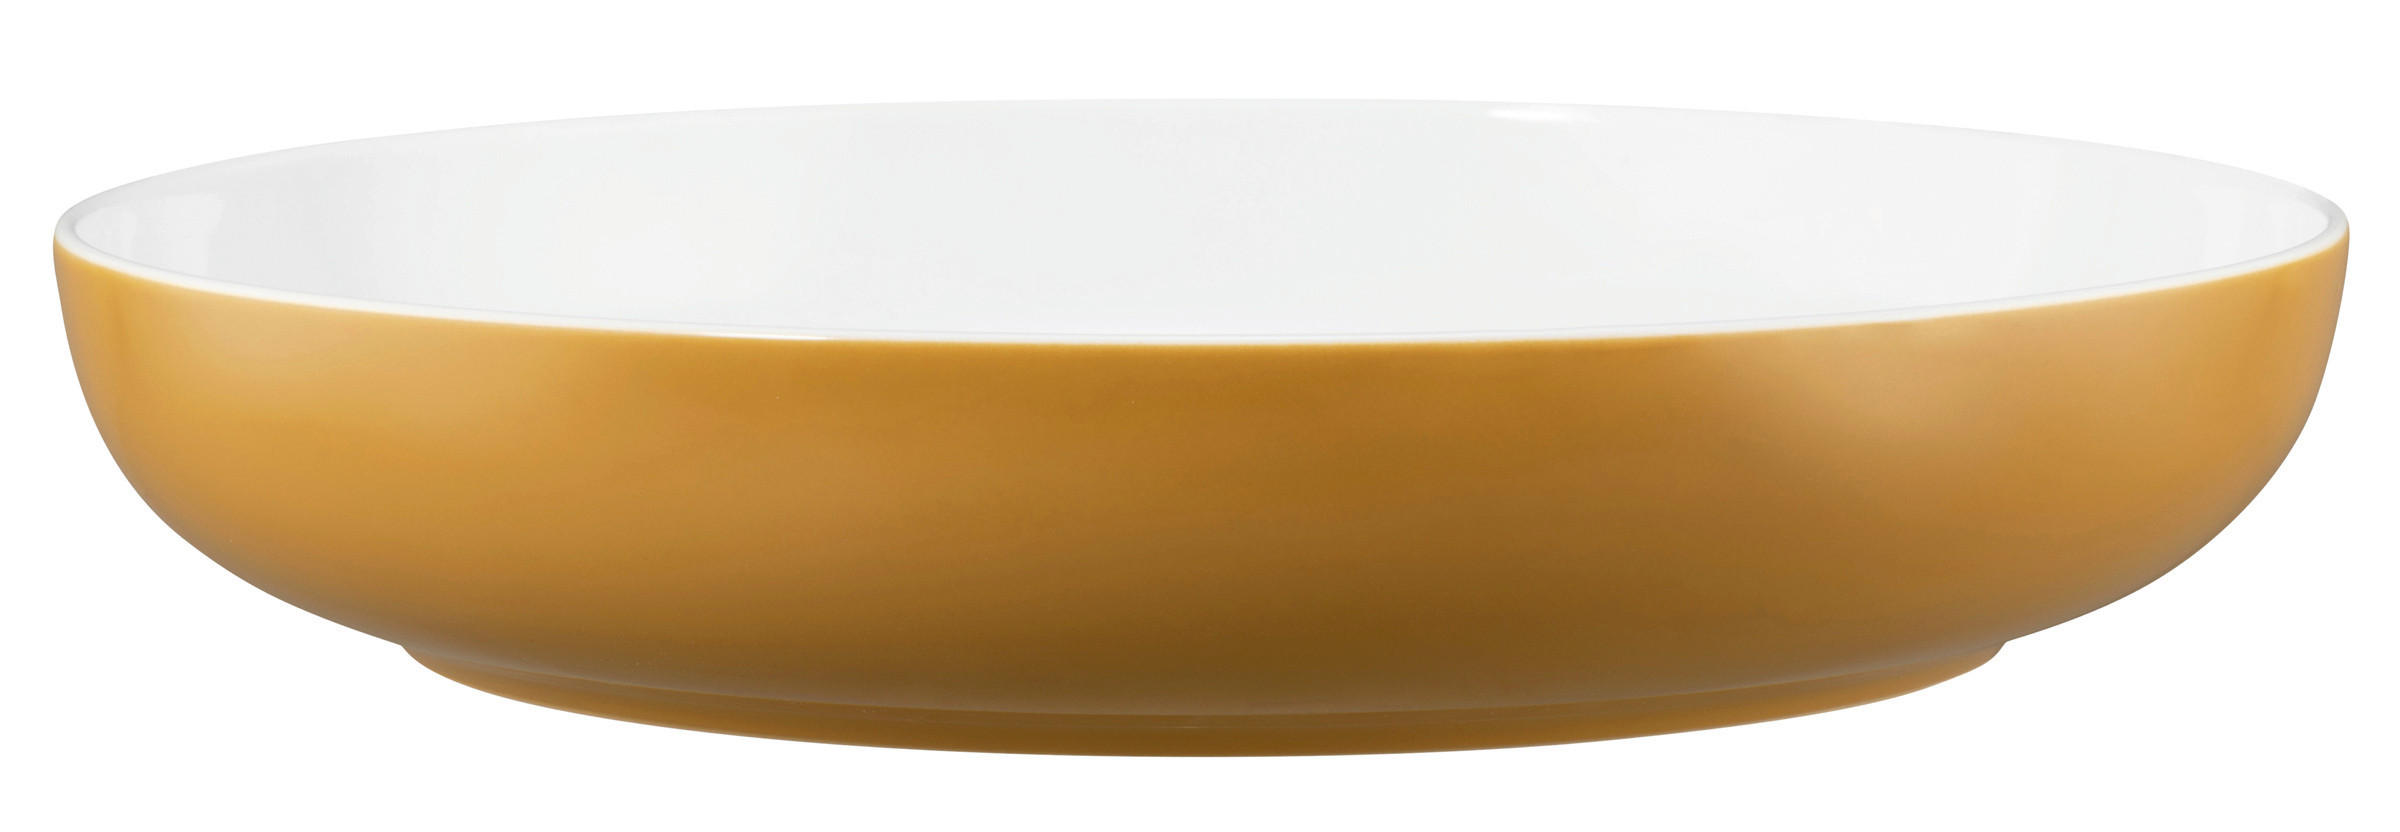 SCHÜSSEL Keramik Porzellan  - Goldfarben, Basics, Keramik (28cm) - Seltmann Weiden